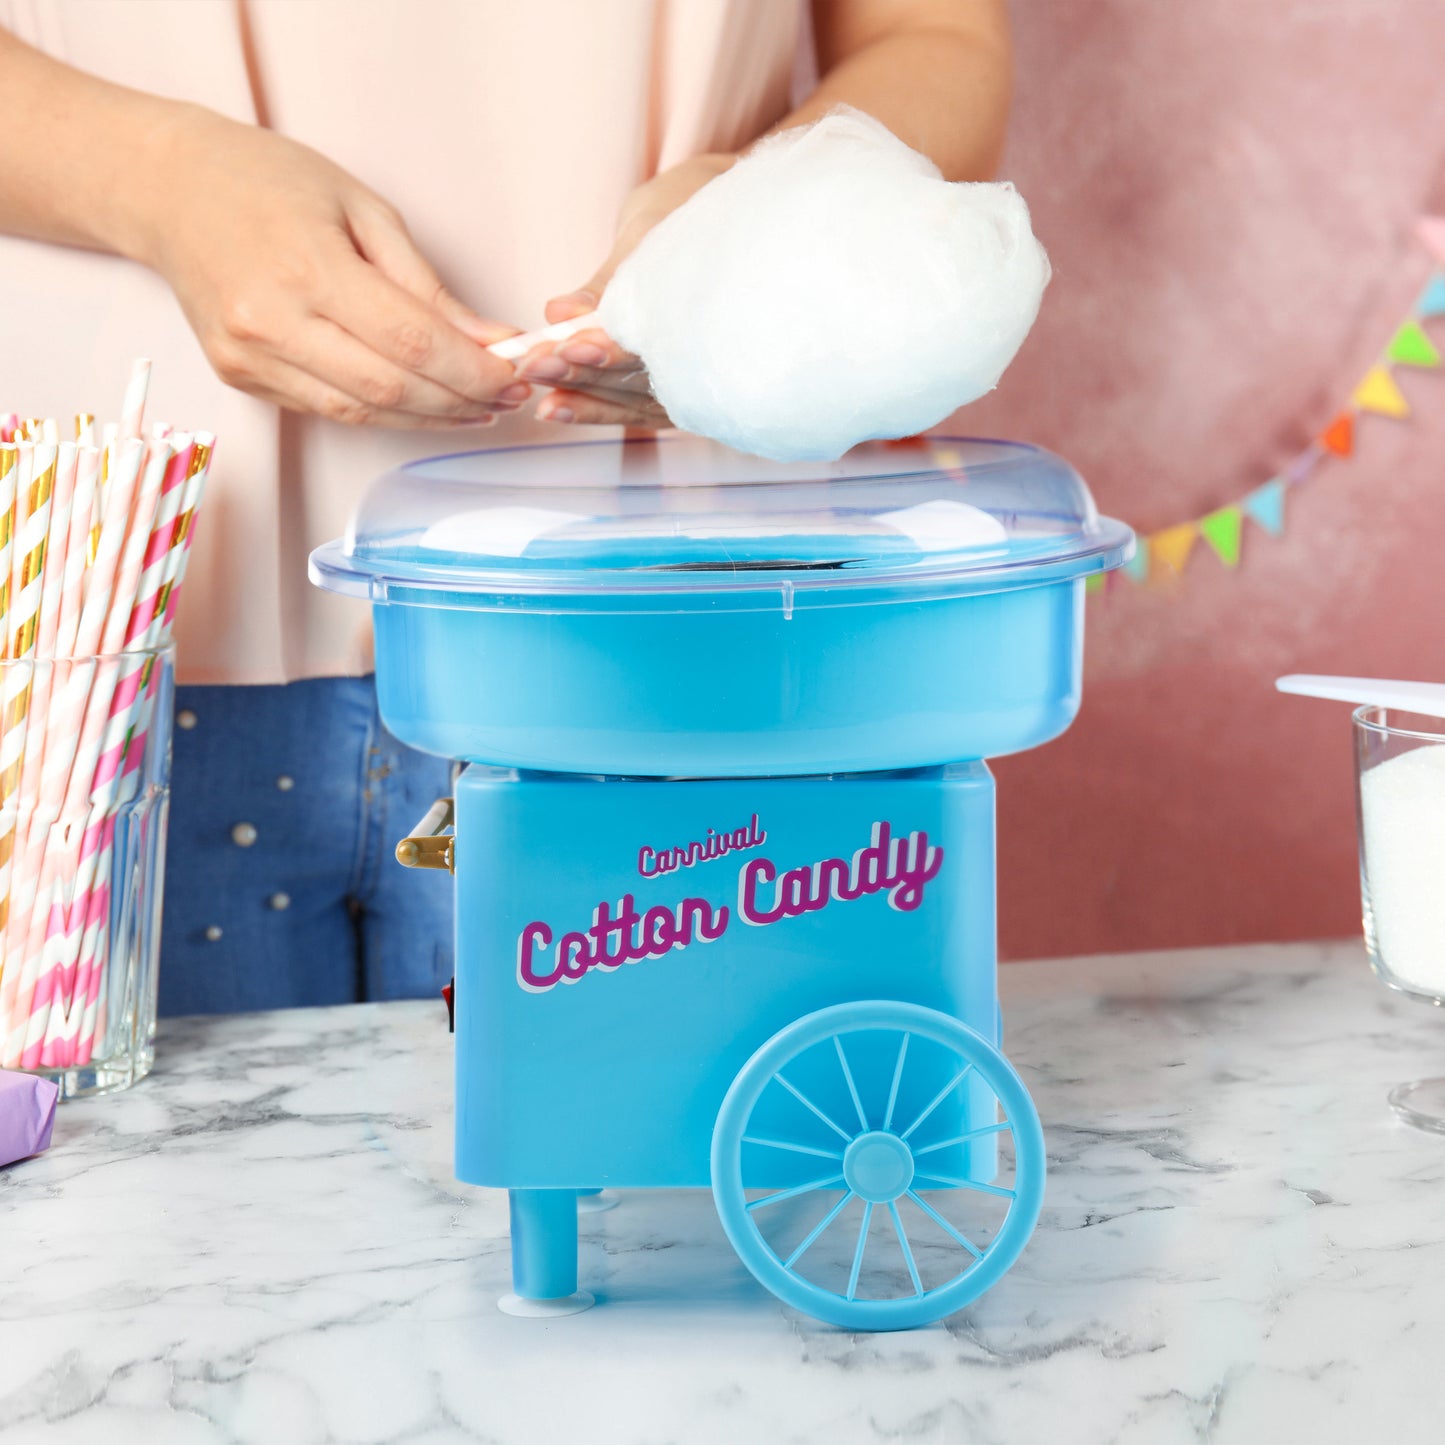 Countertop Cotton Candy Machine – Blue